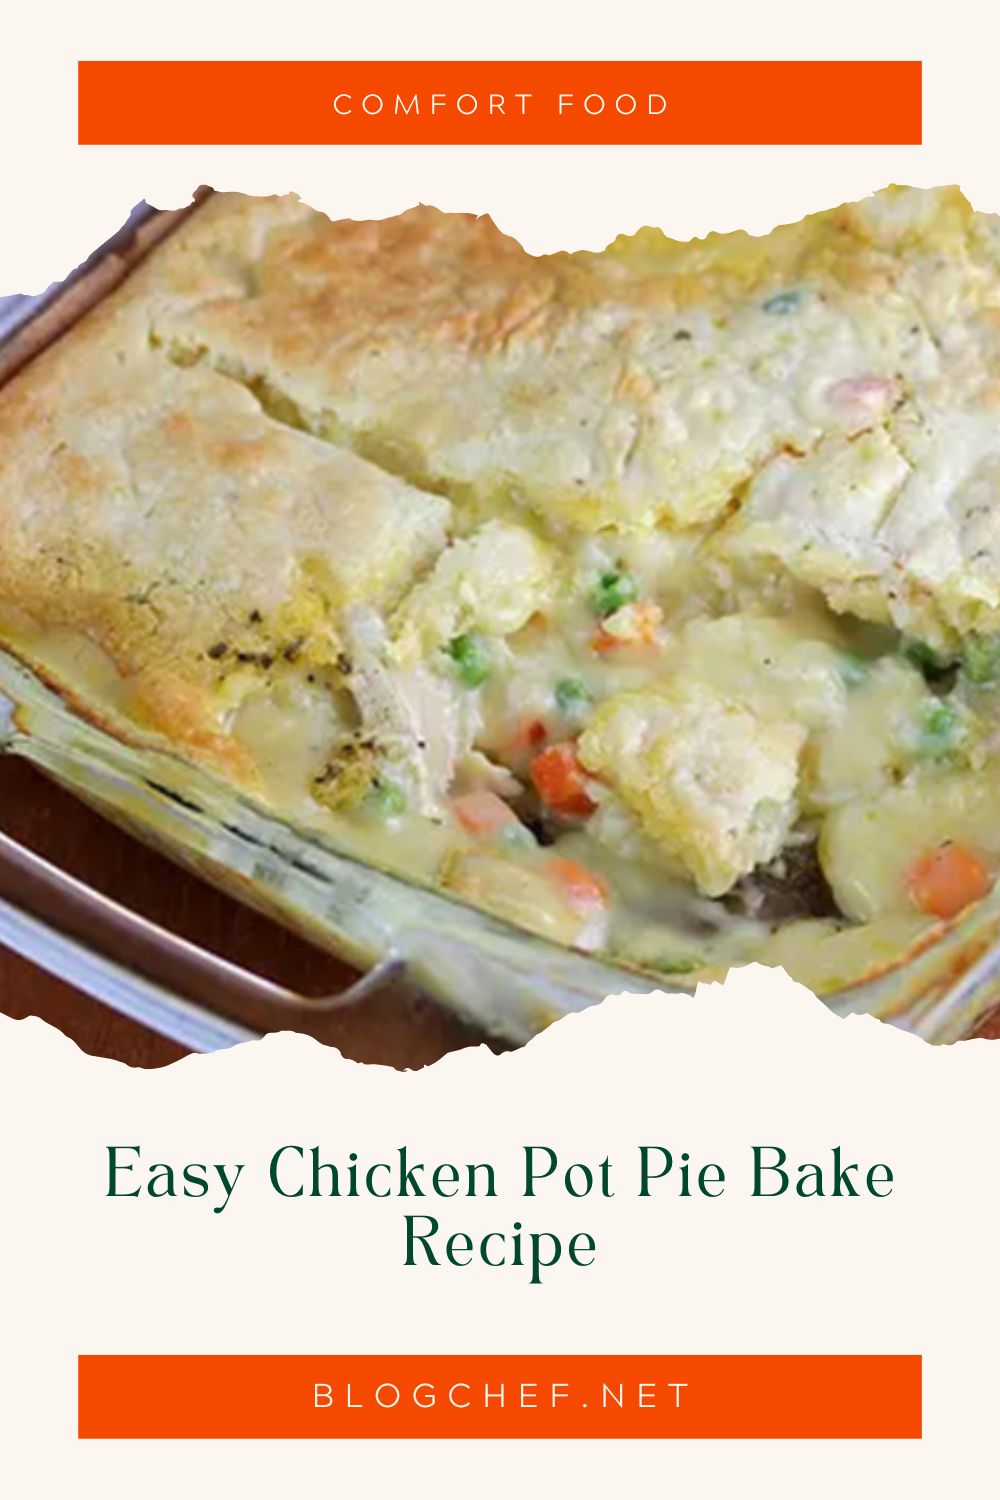 Easy chicken pot pie bake recipe.